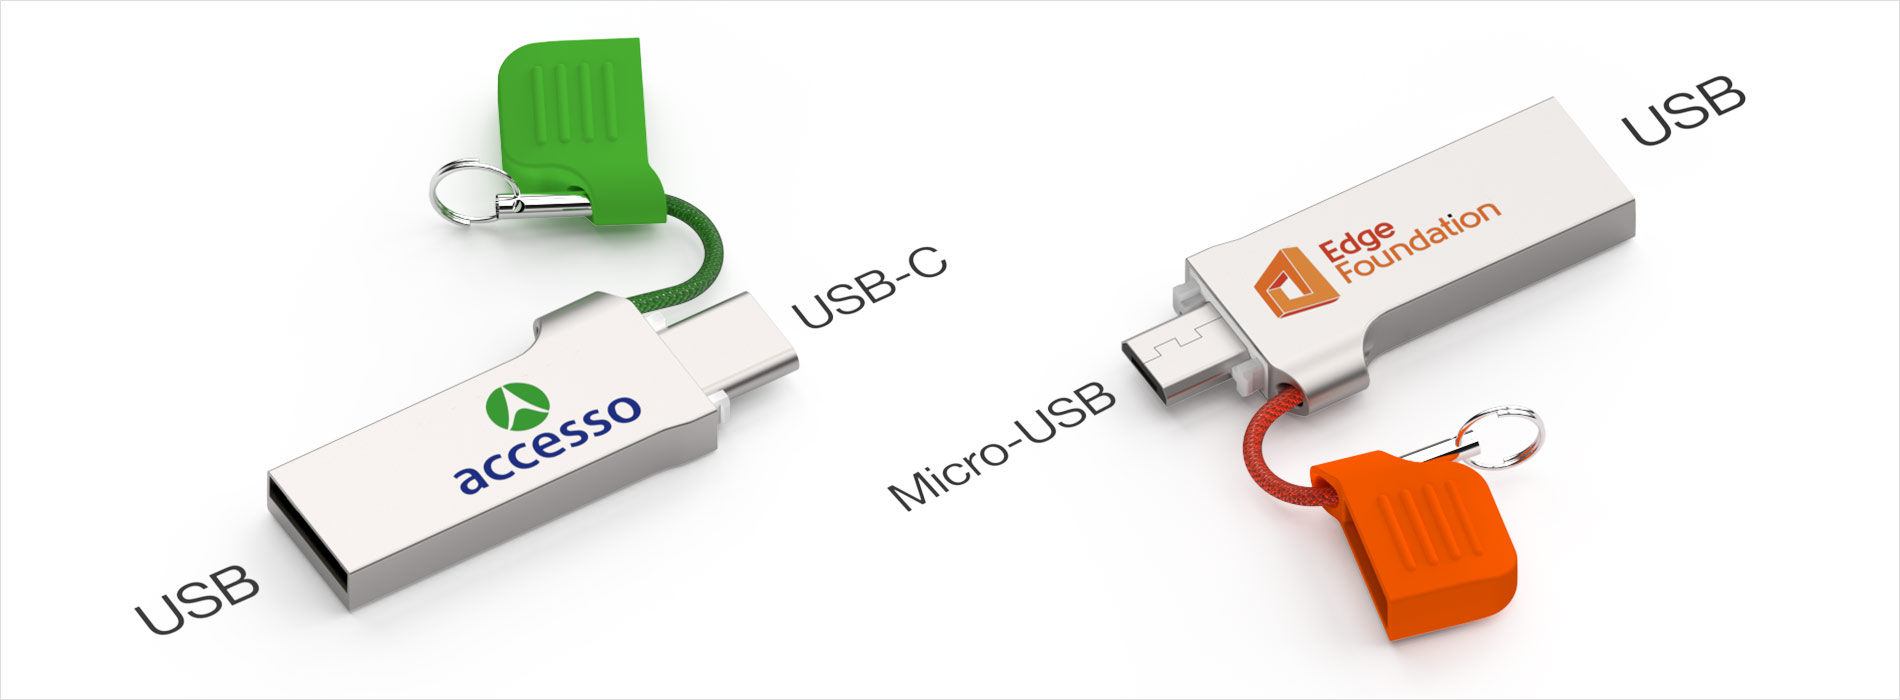 USB On-The-Go - Wikipedia